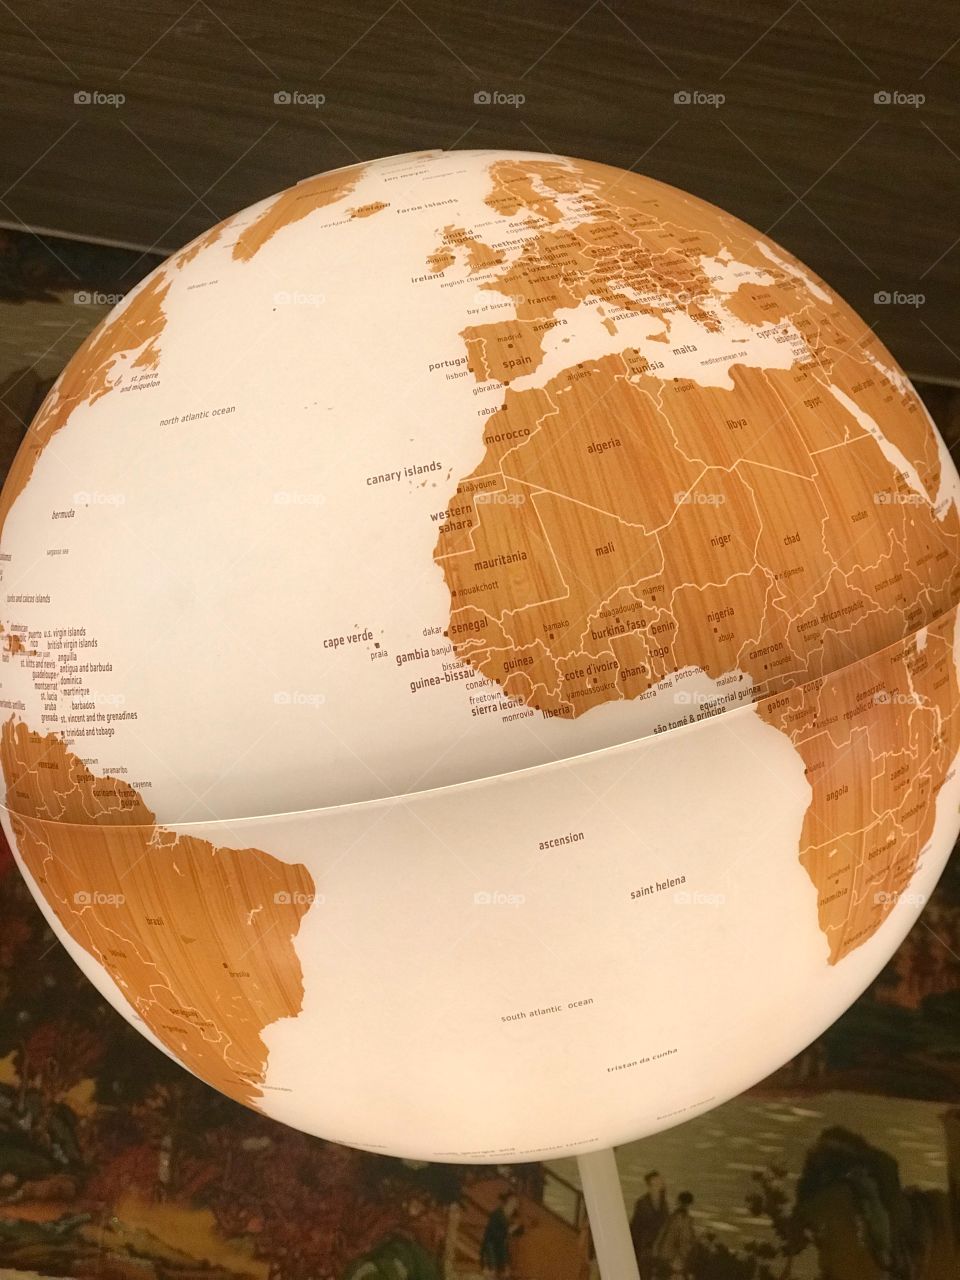 Tiffany warm lamp globe earth planet world map 